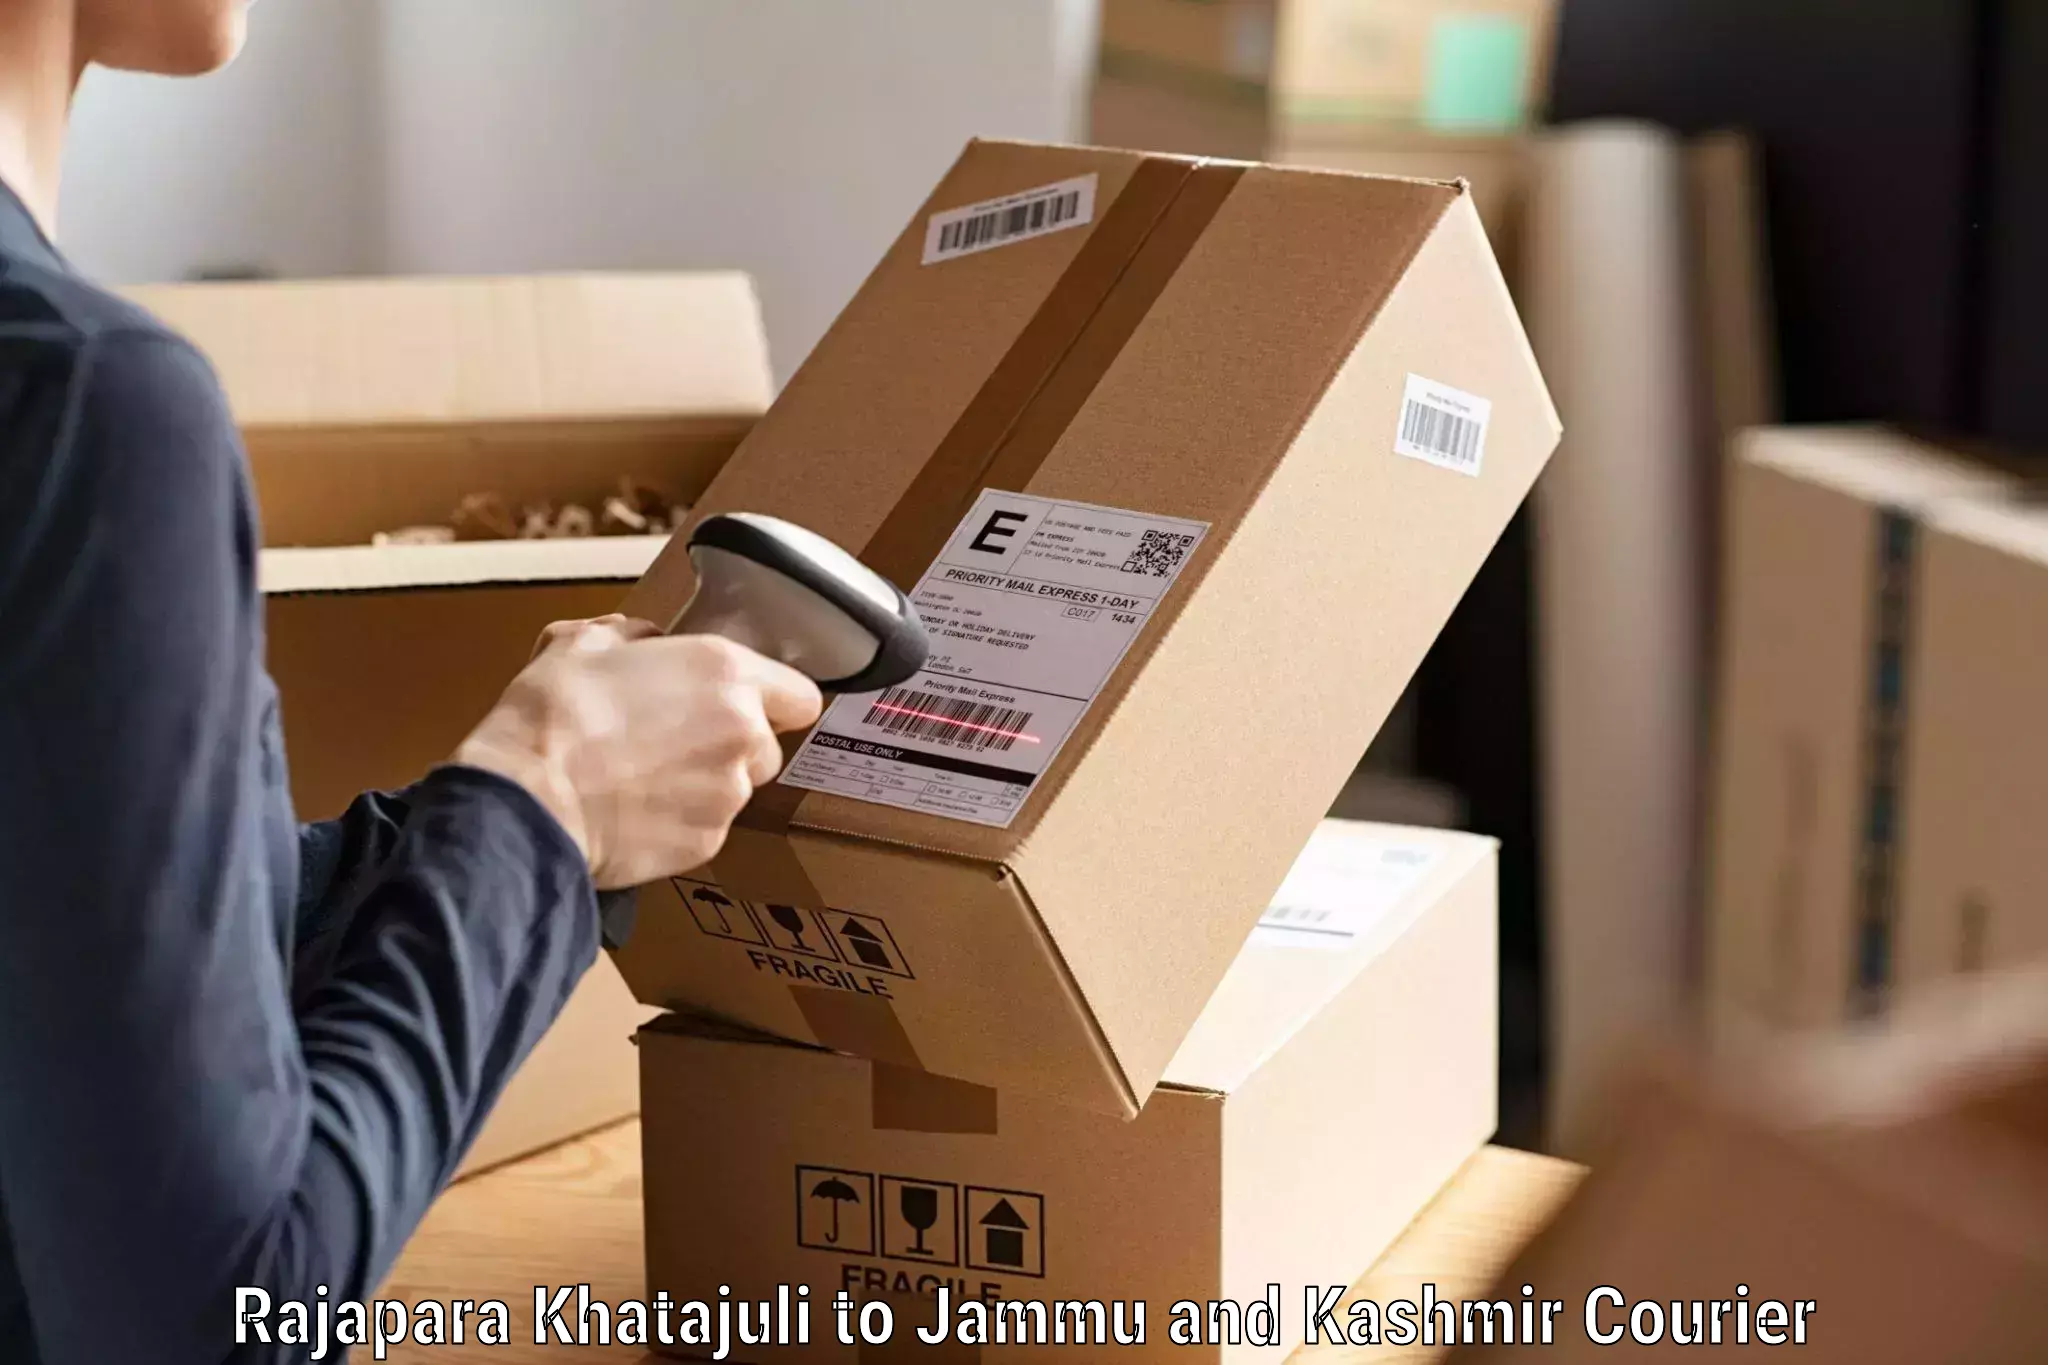 Professional courier handling Rajapara Khatajuli to Sunderbani